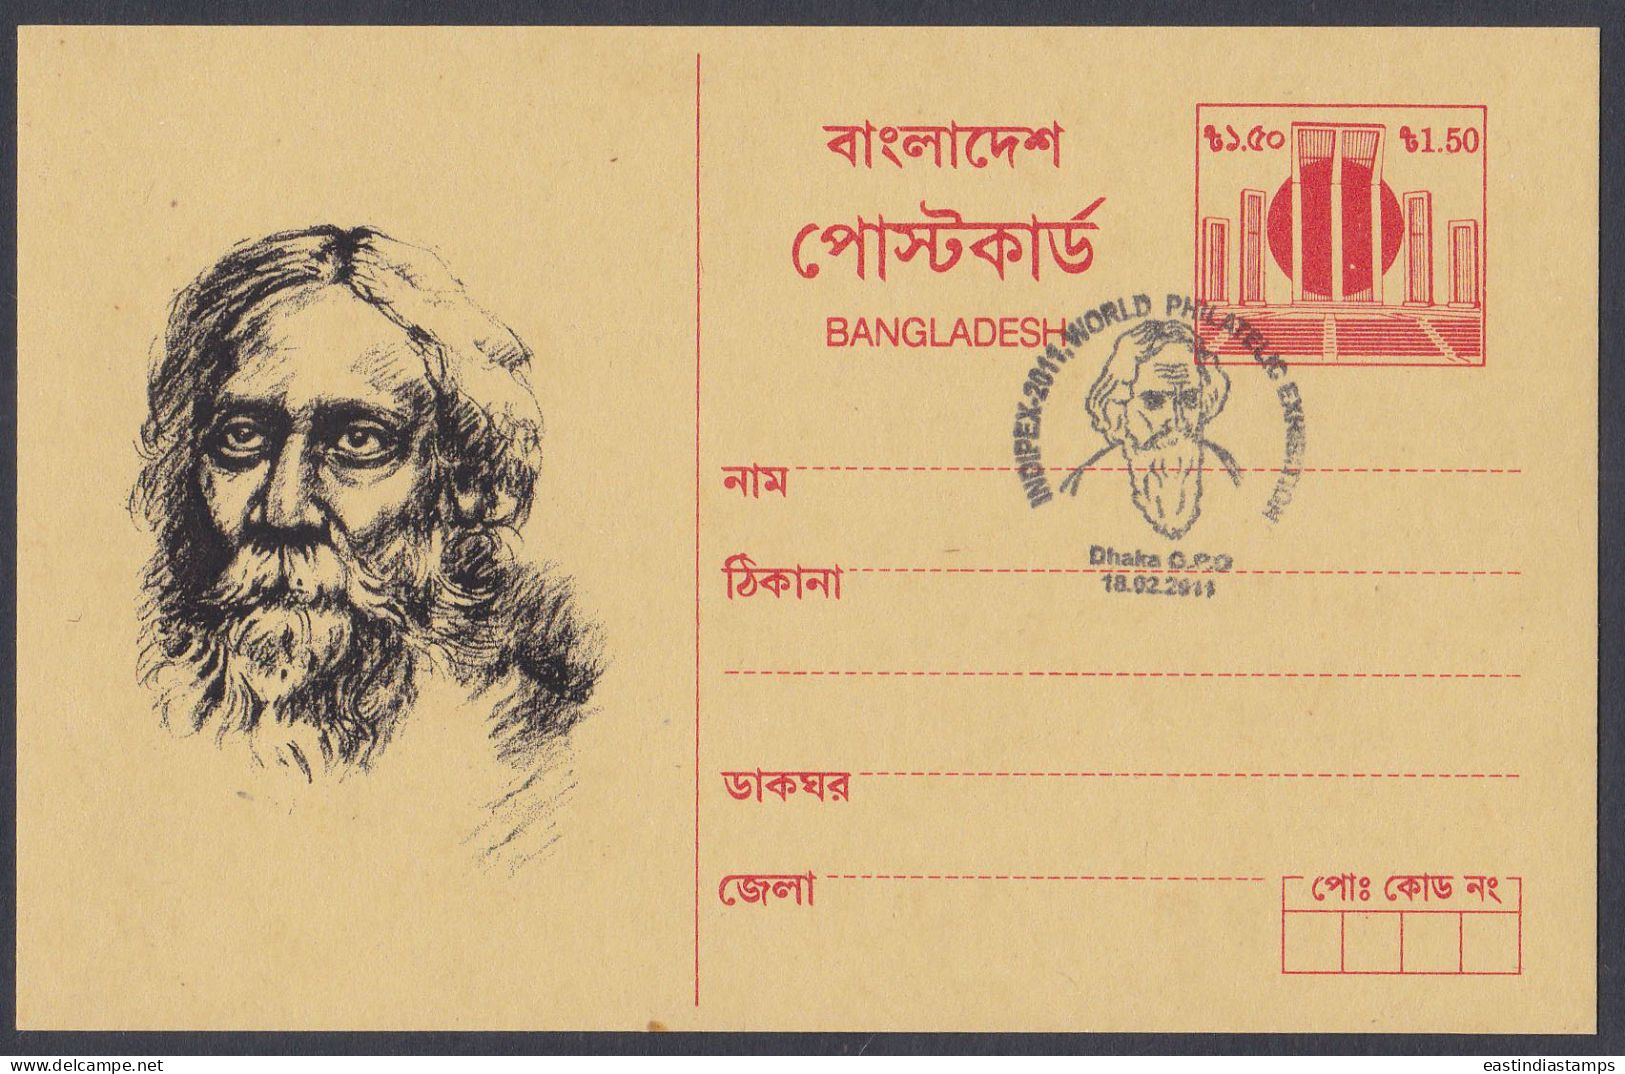 Bangladesh 2011 Postcard Indipex Stamp Exhibition, Rabindranath Tagore Pictorial Postmark, Literature, Poet, Nobel Prize - Bangladesh